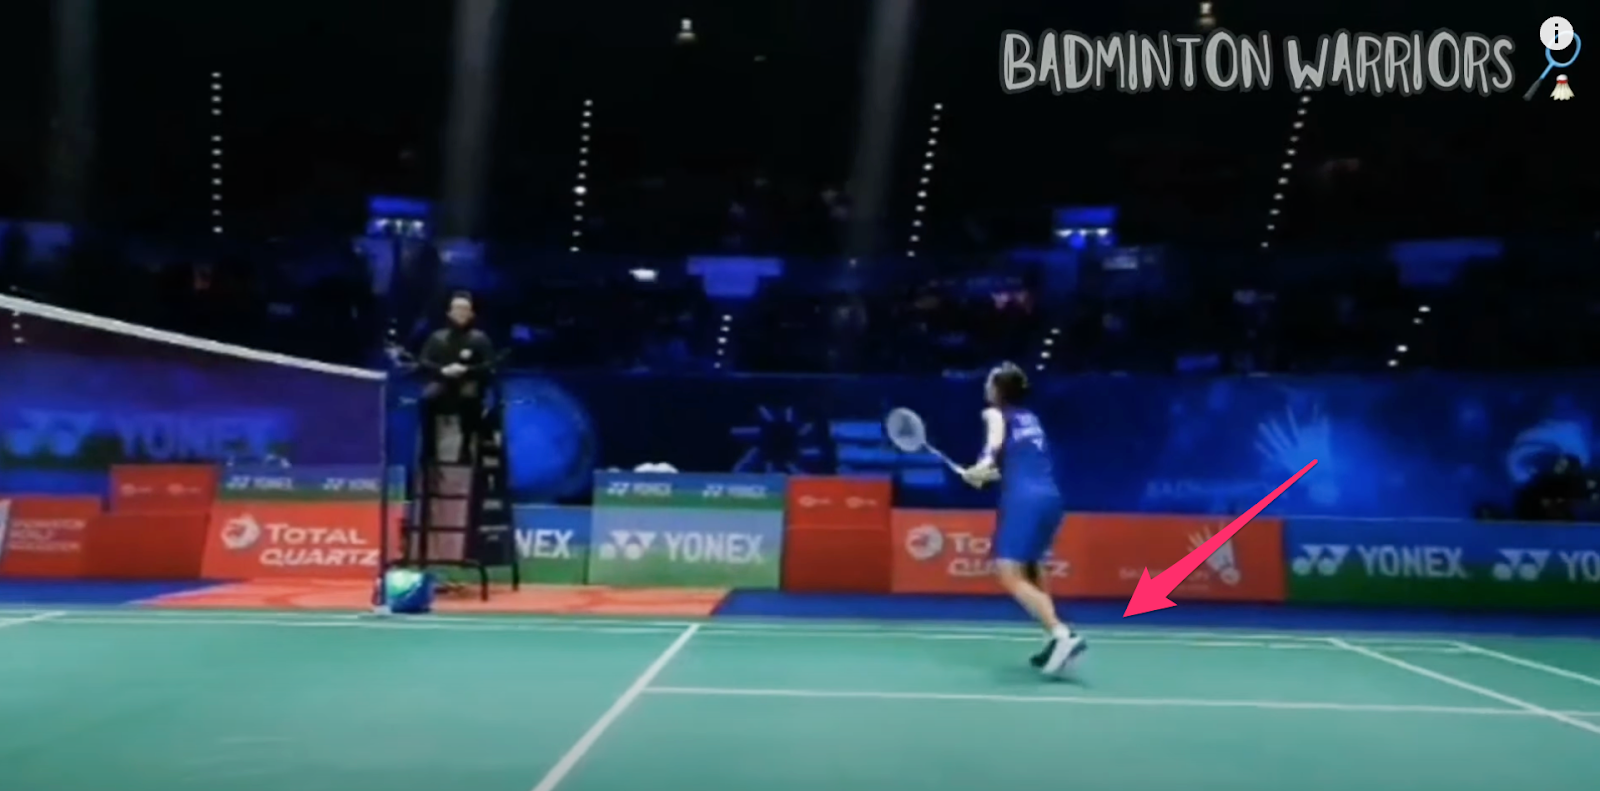 split step badminton - example performed by Tai Tzu Ying